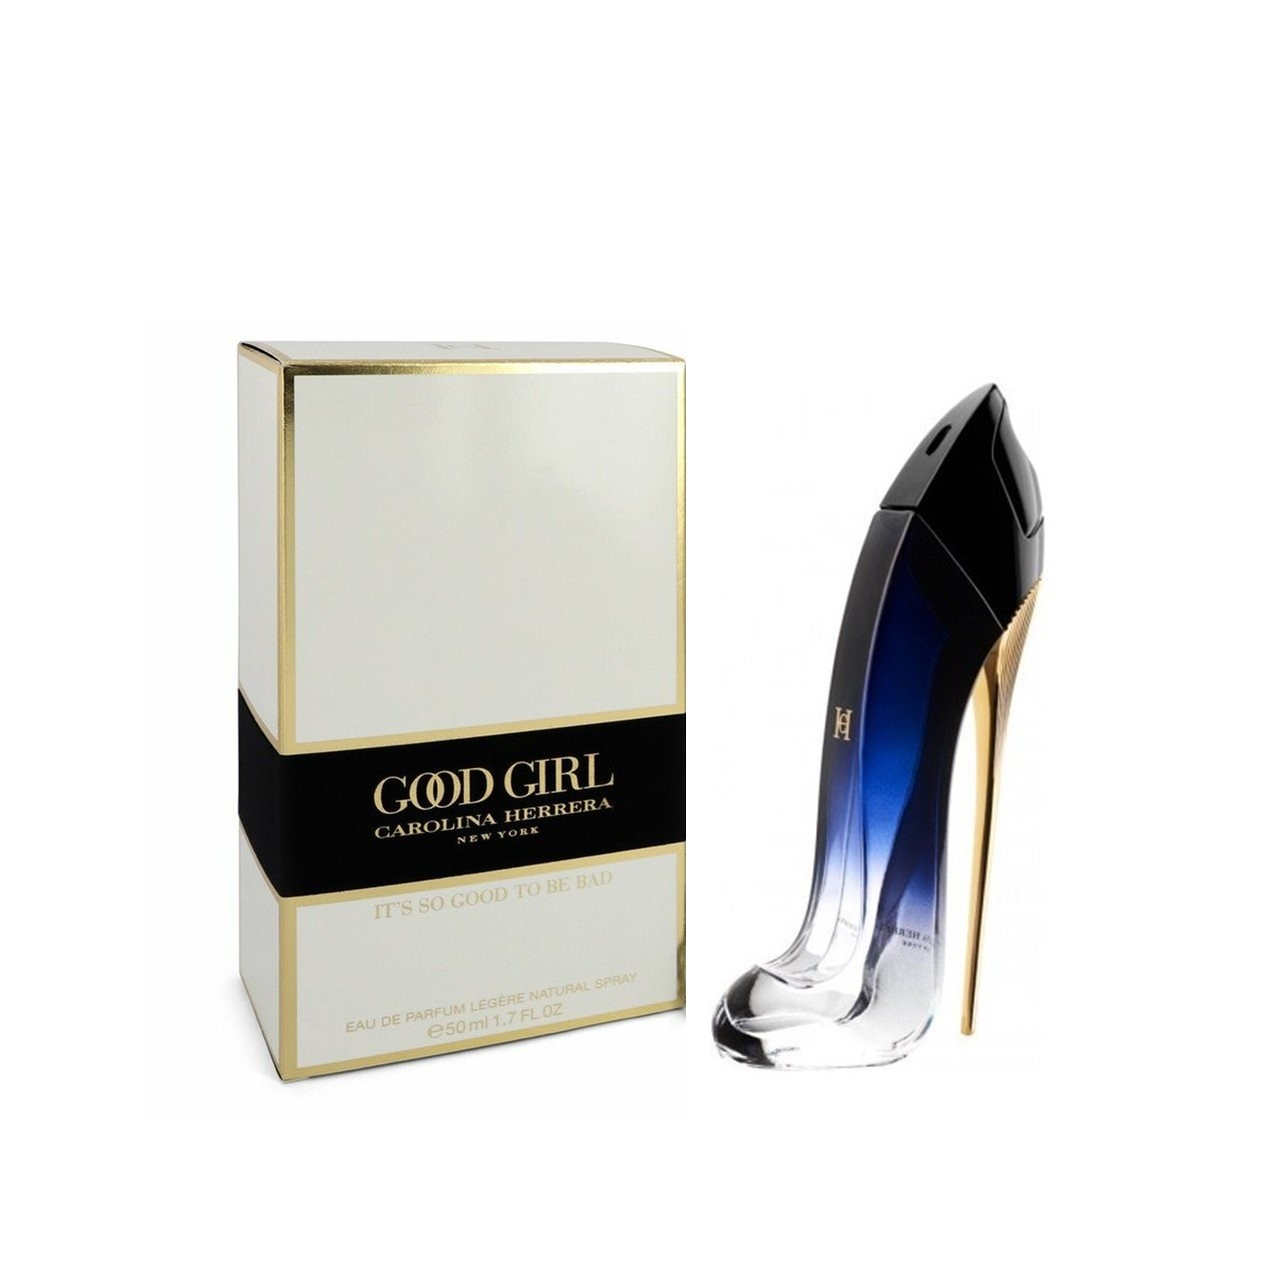 Carolina Herrera Good Girl Eau de Parfum Légère 50ml